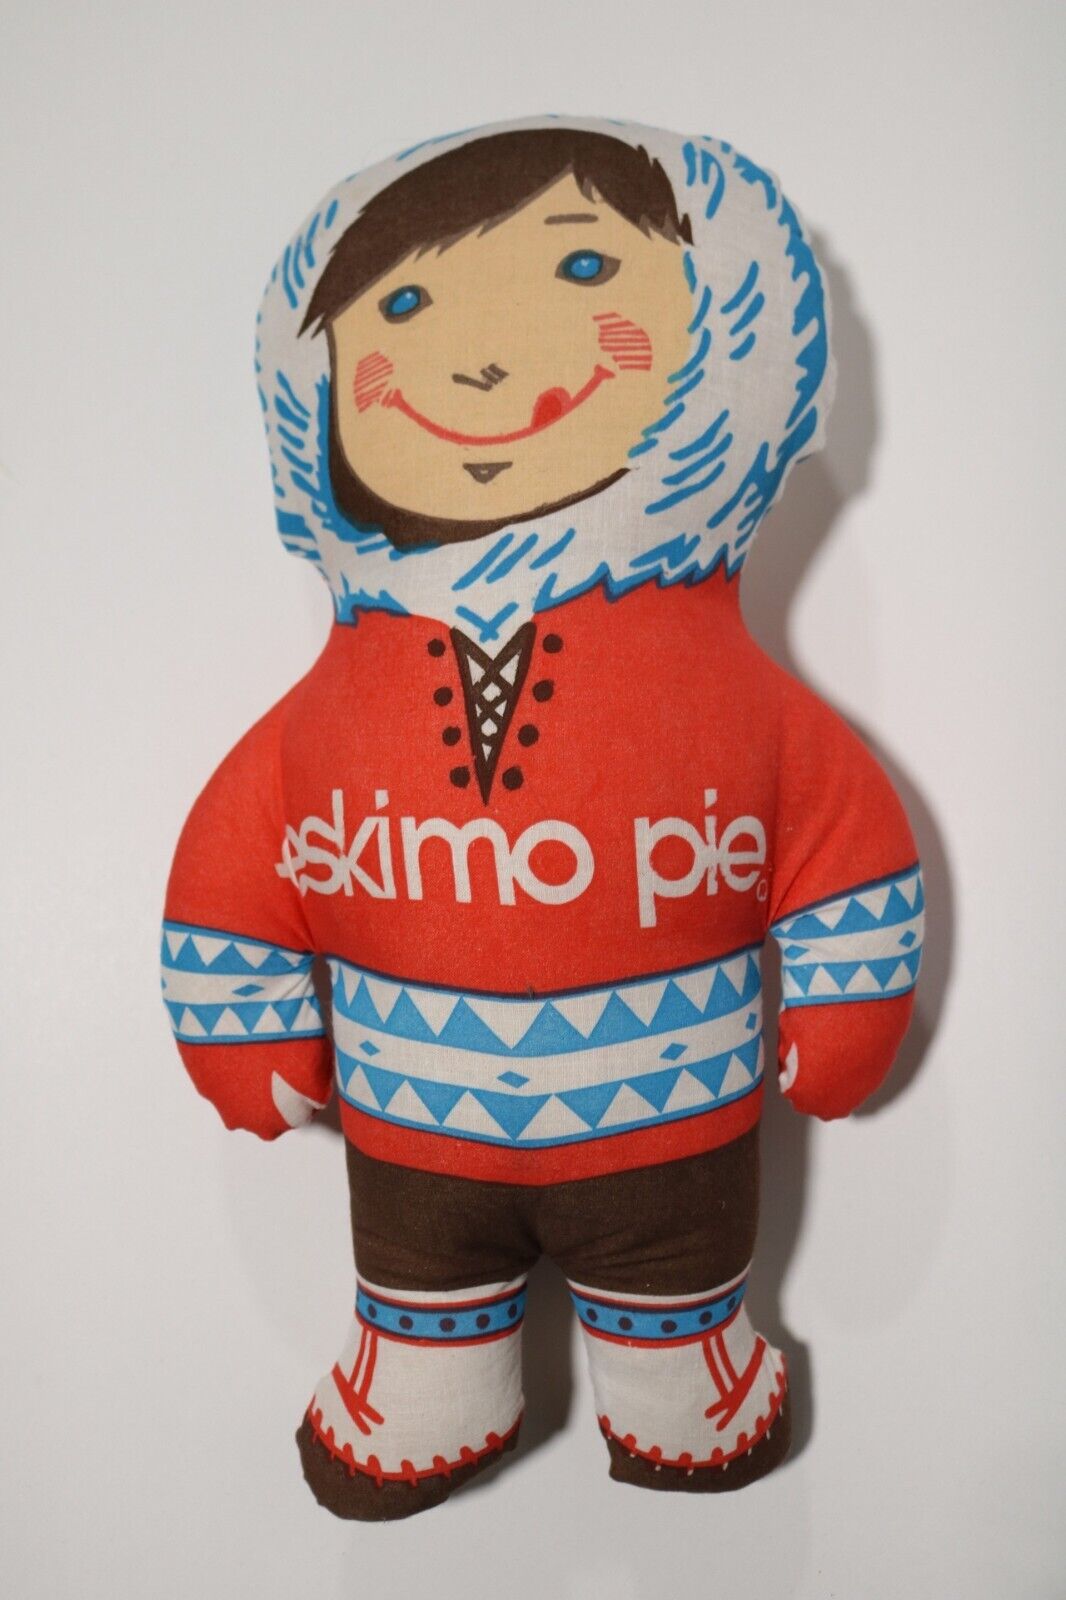 🍦 Vintage Eskimo Pie Advertising Plush Cloth Doll 15” Ice Cream Promotional 70s